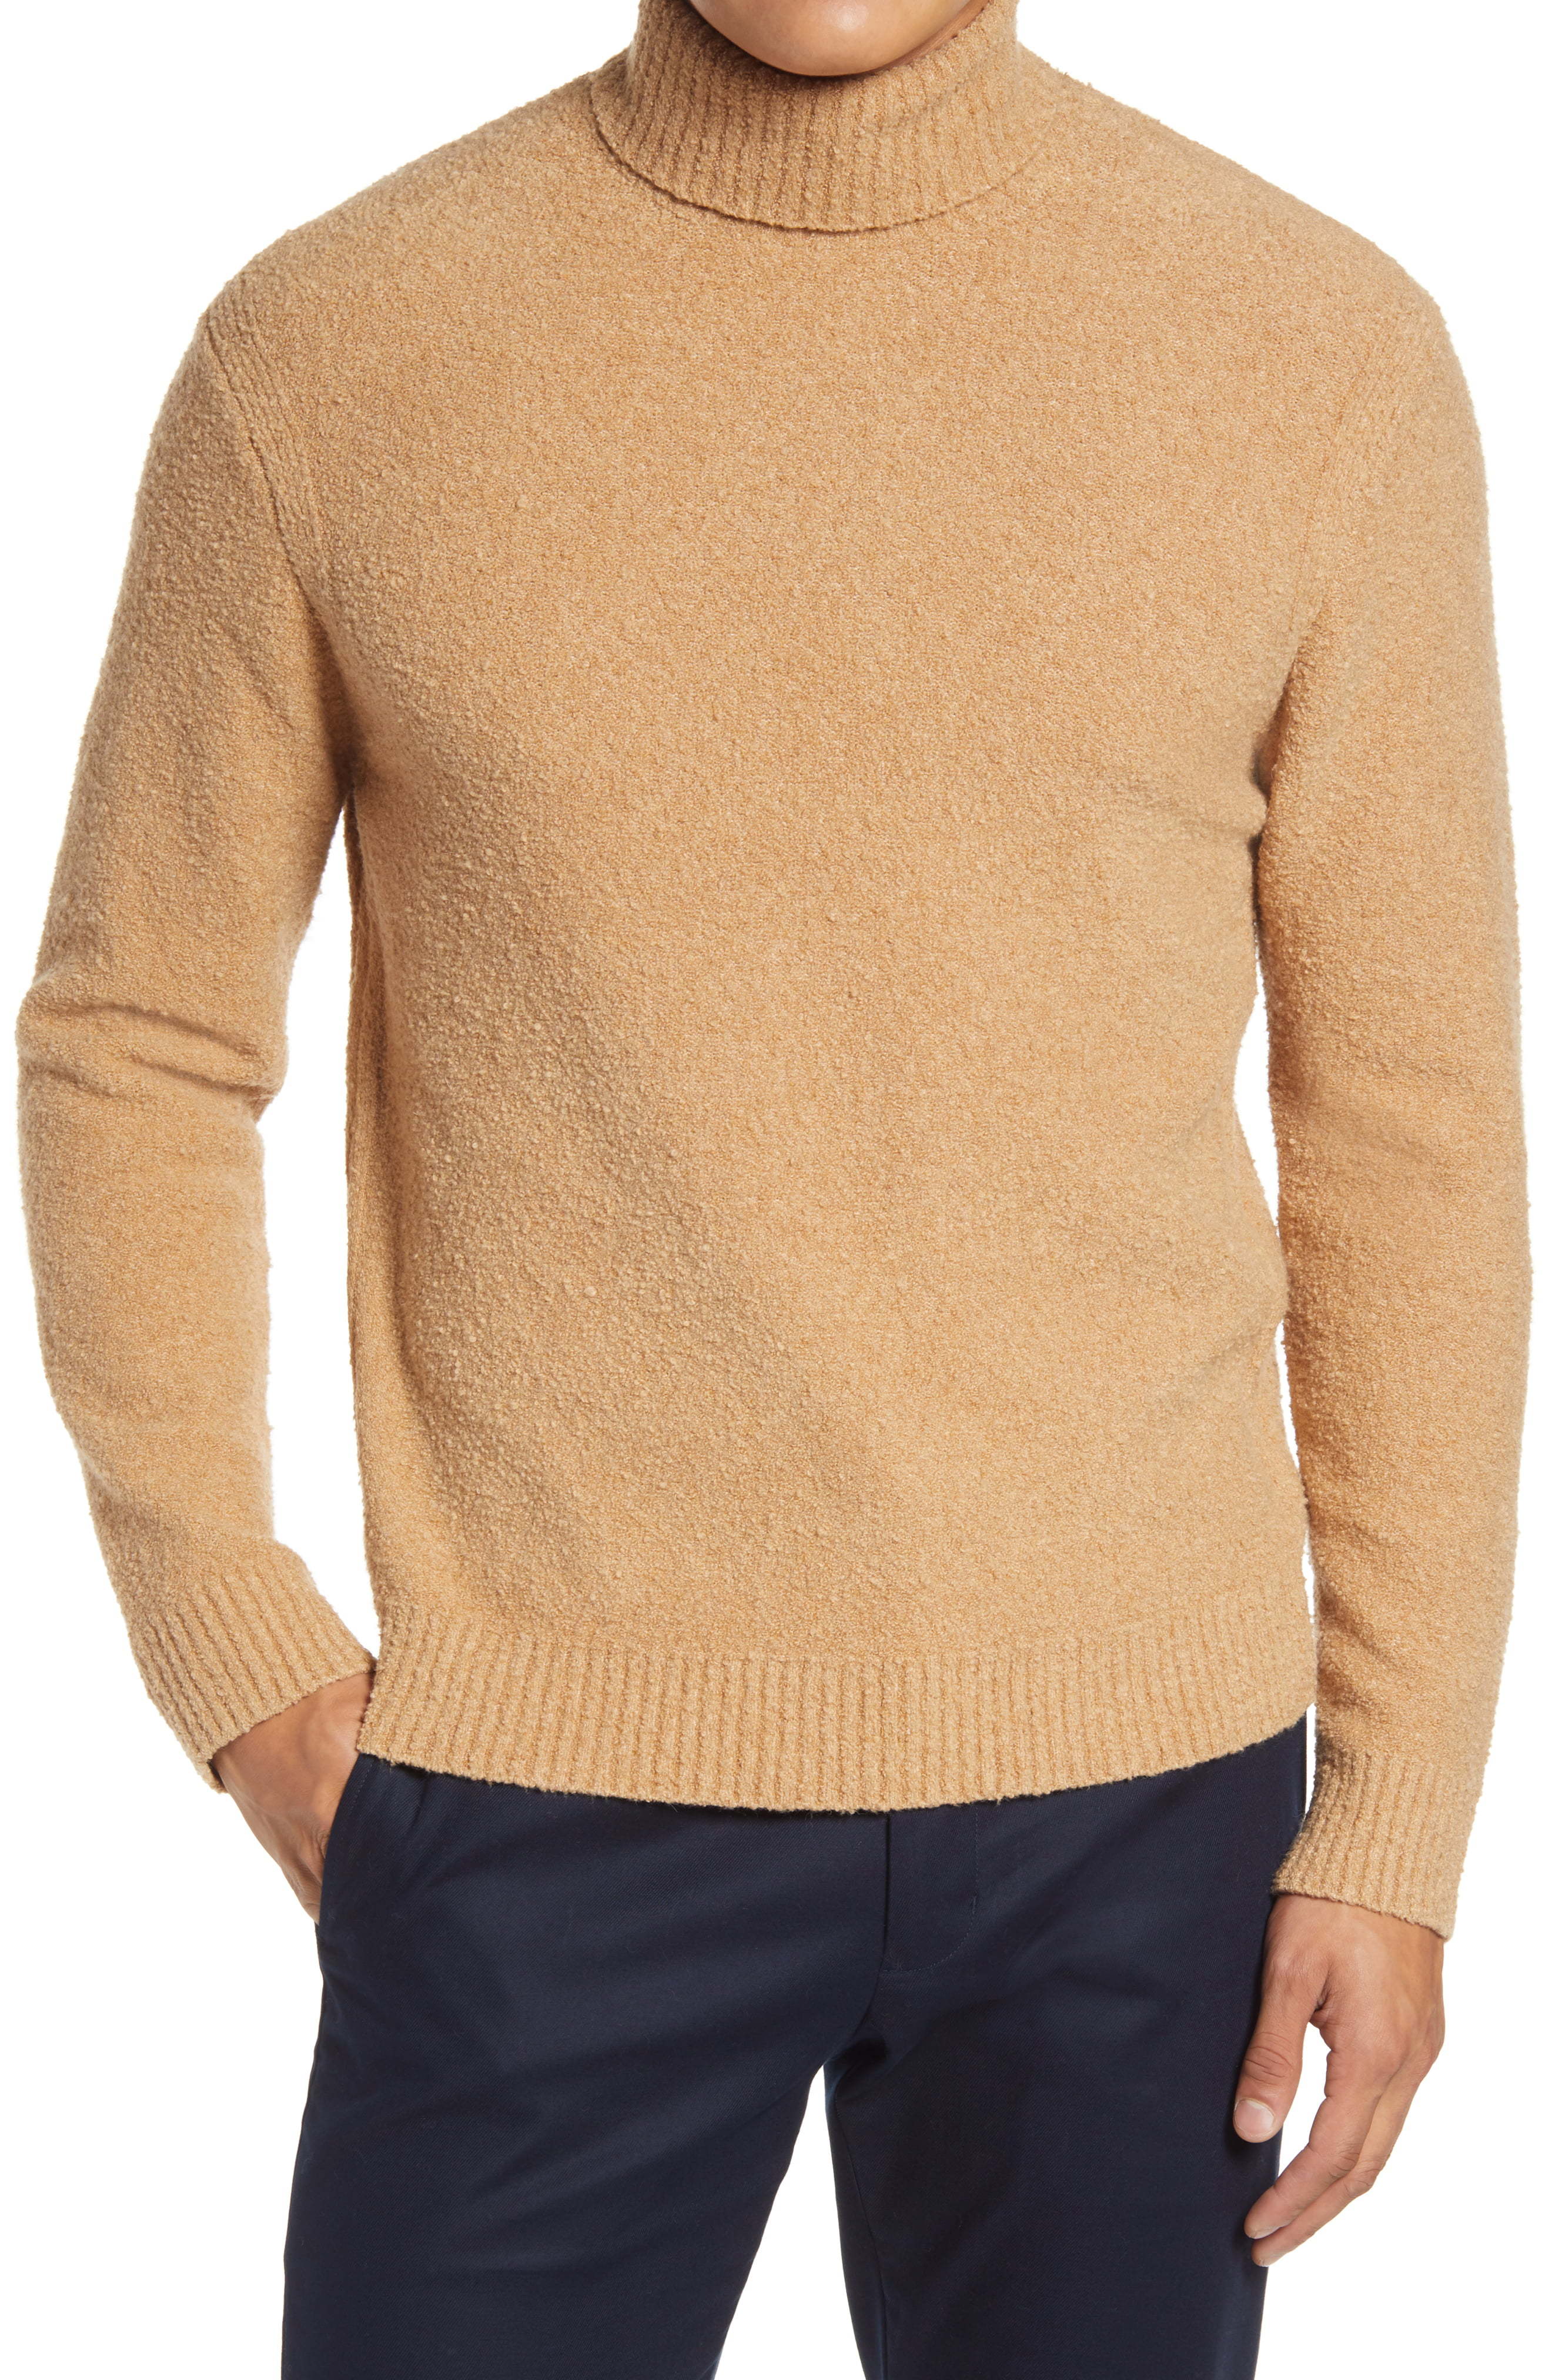 Club Monaco Boucle Cotton Blend Turtleneck Sweater, $149 | Nordstrom ...